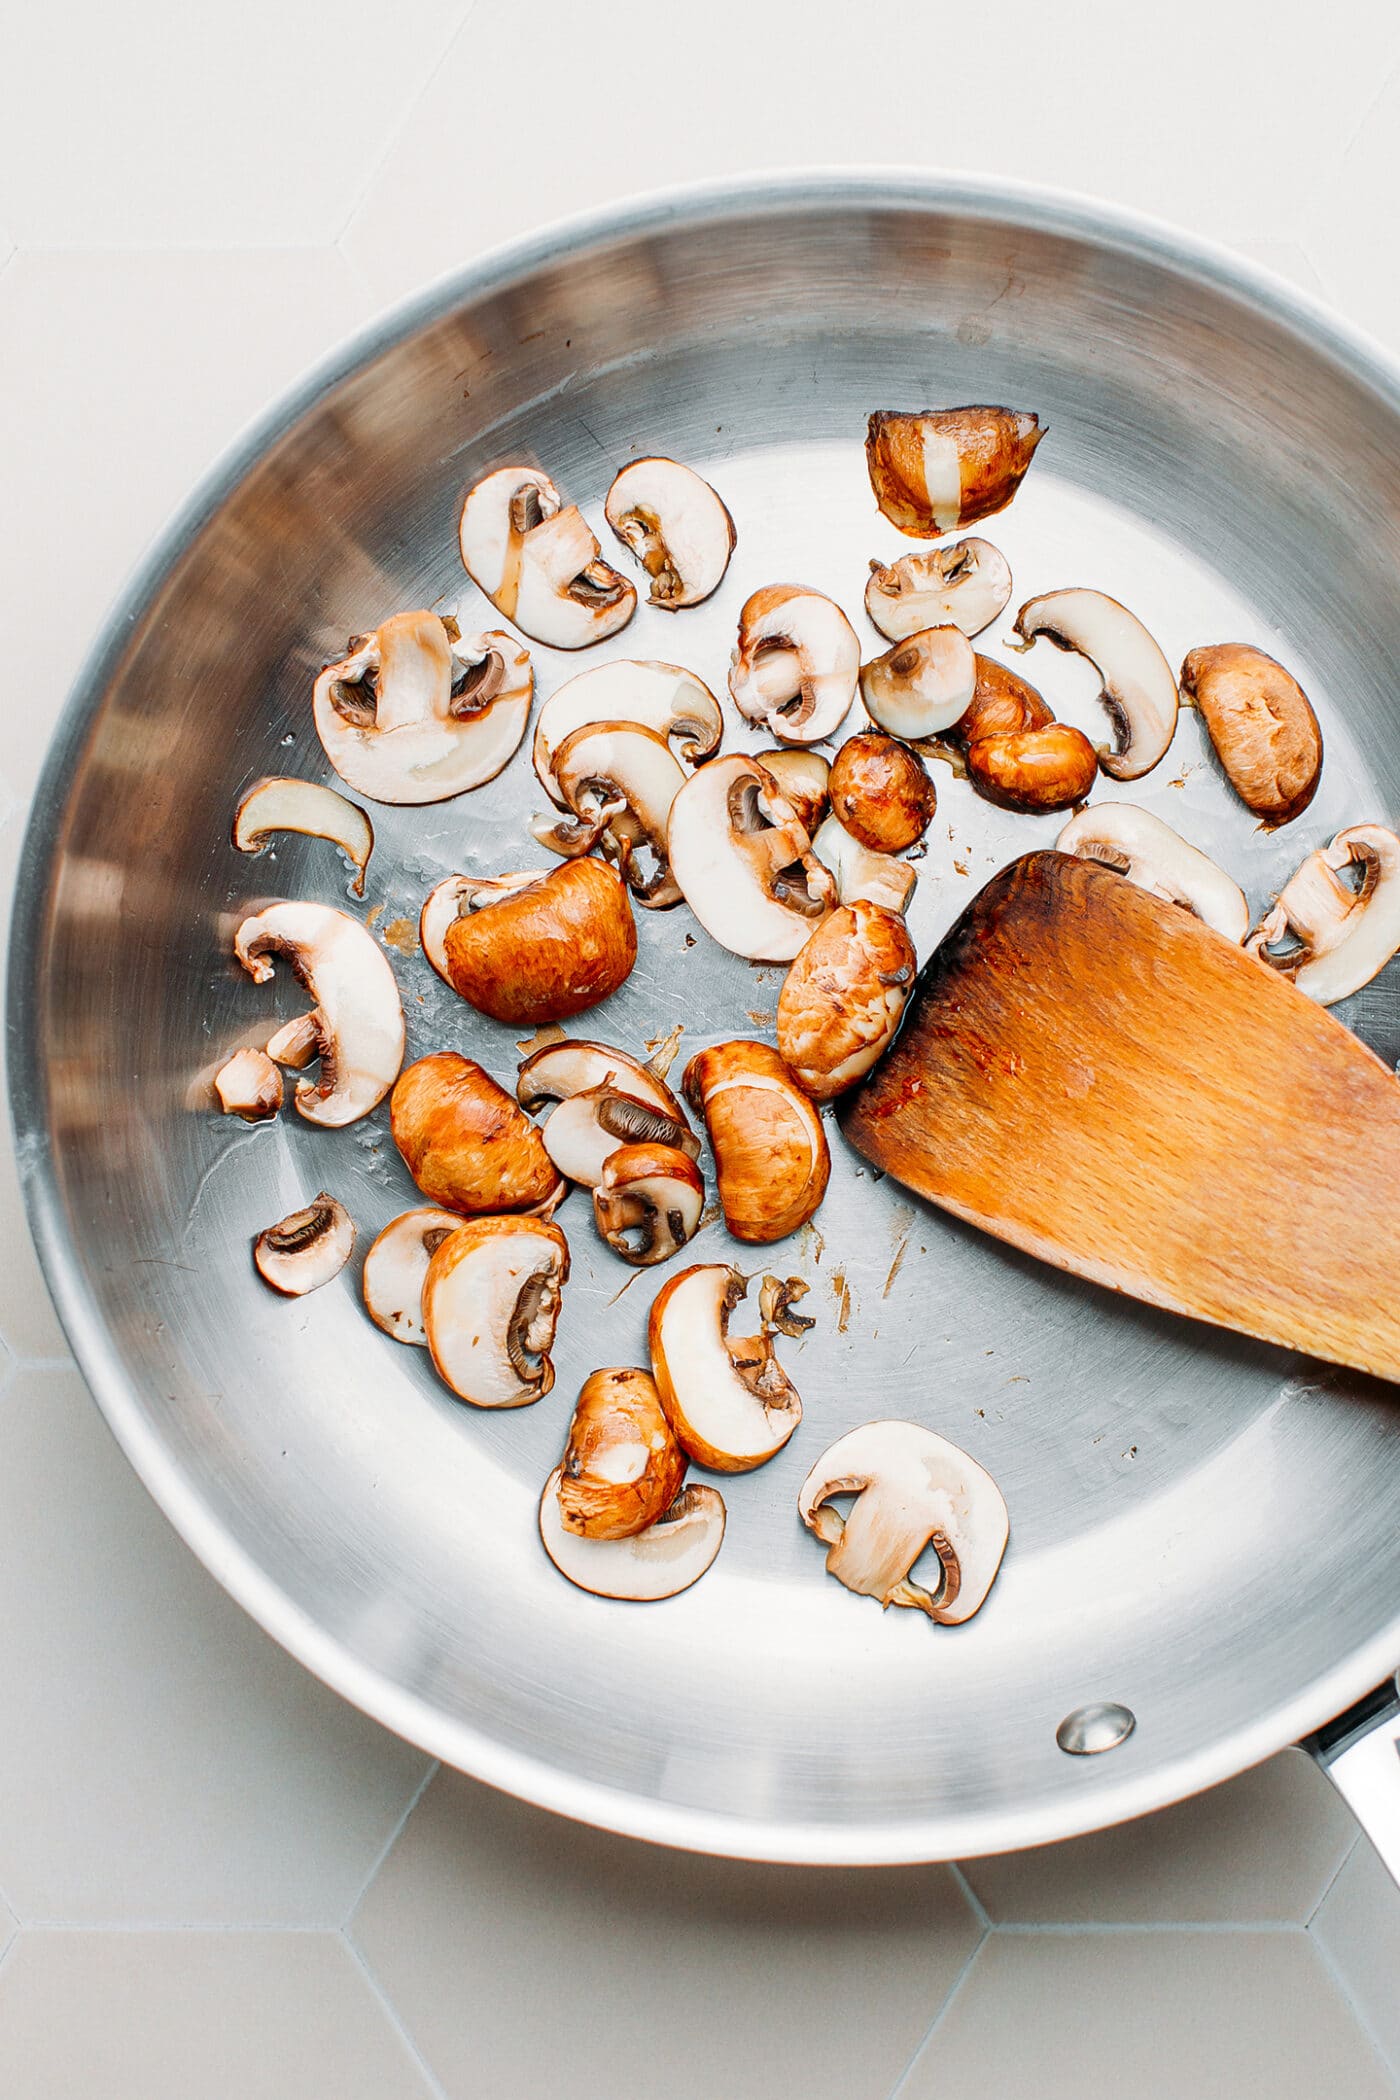 Sautéed mushrooms in a pan.